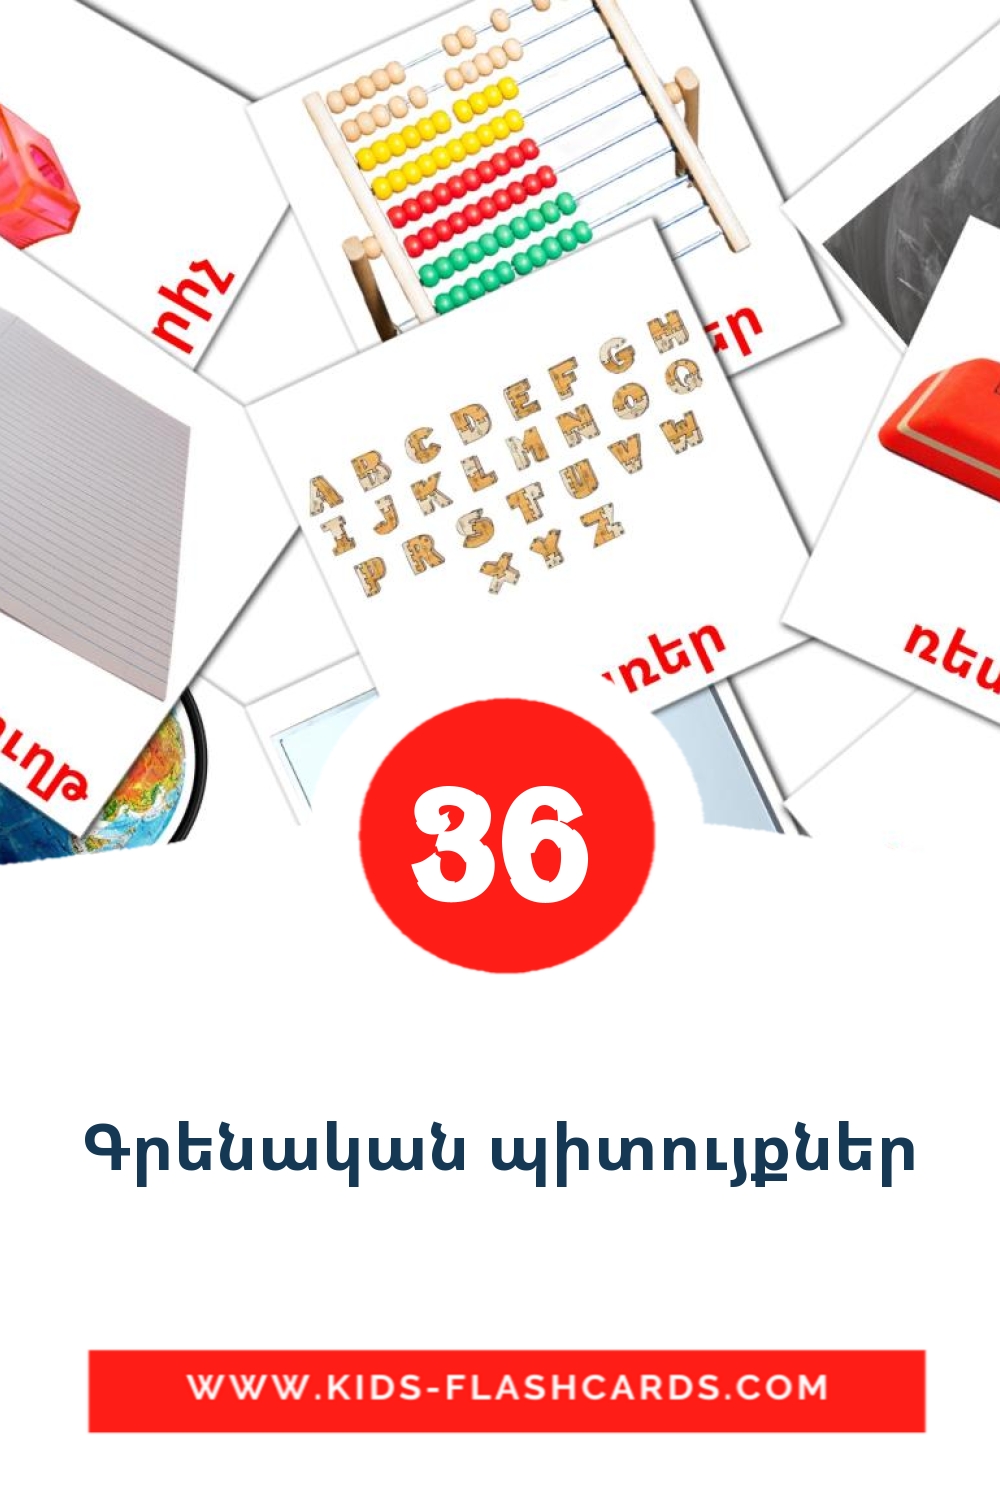 36 carte illustrate di Գրենական պիտույքներ per la scuola materna in armeno